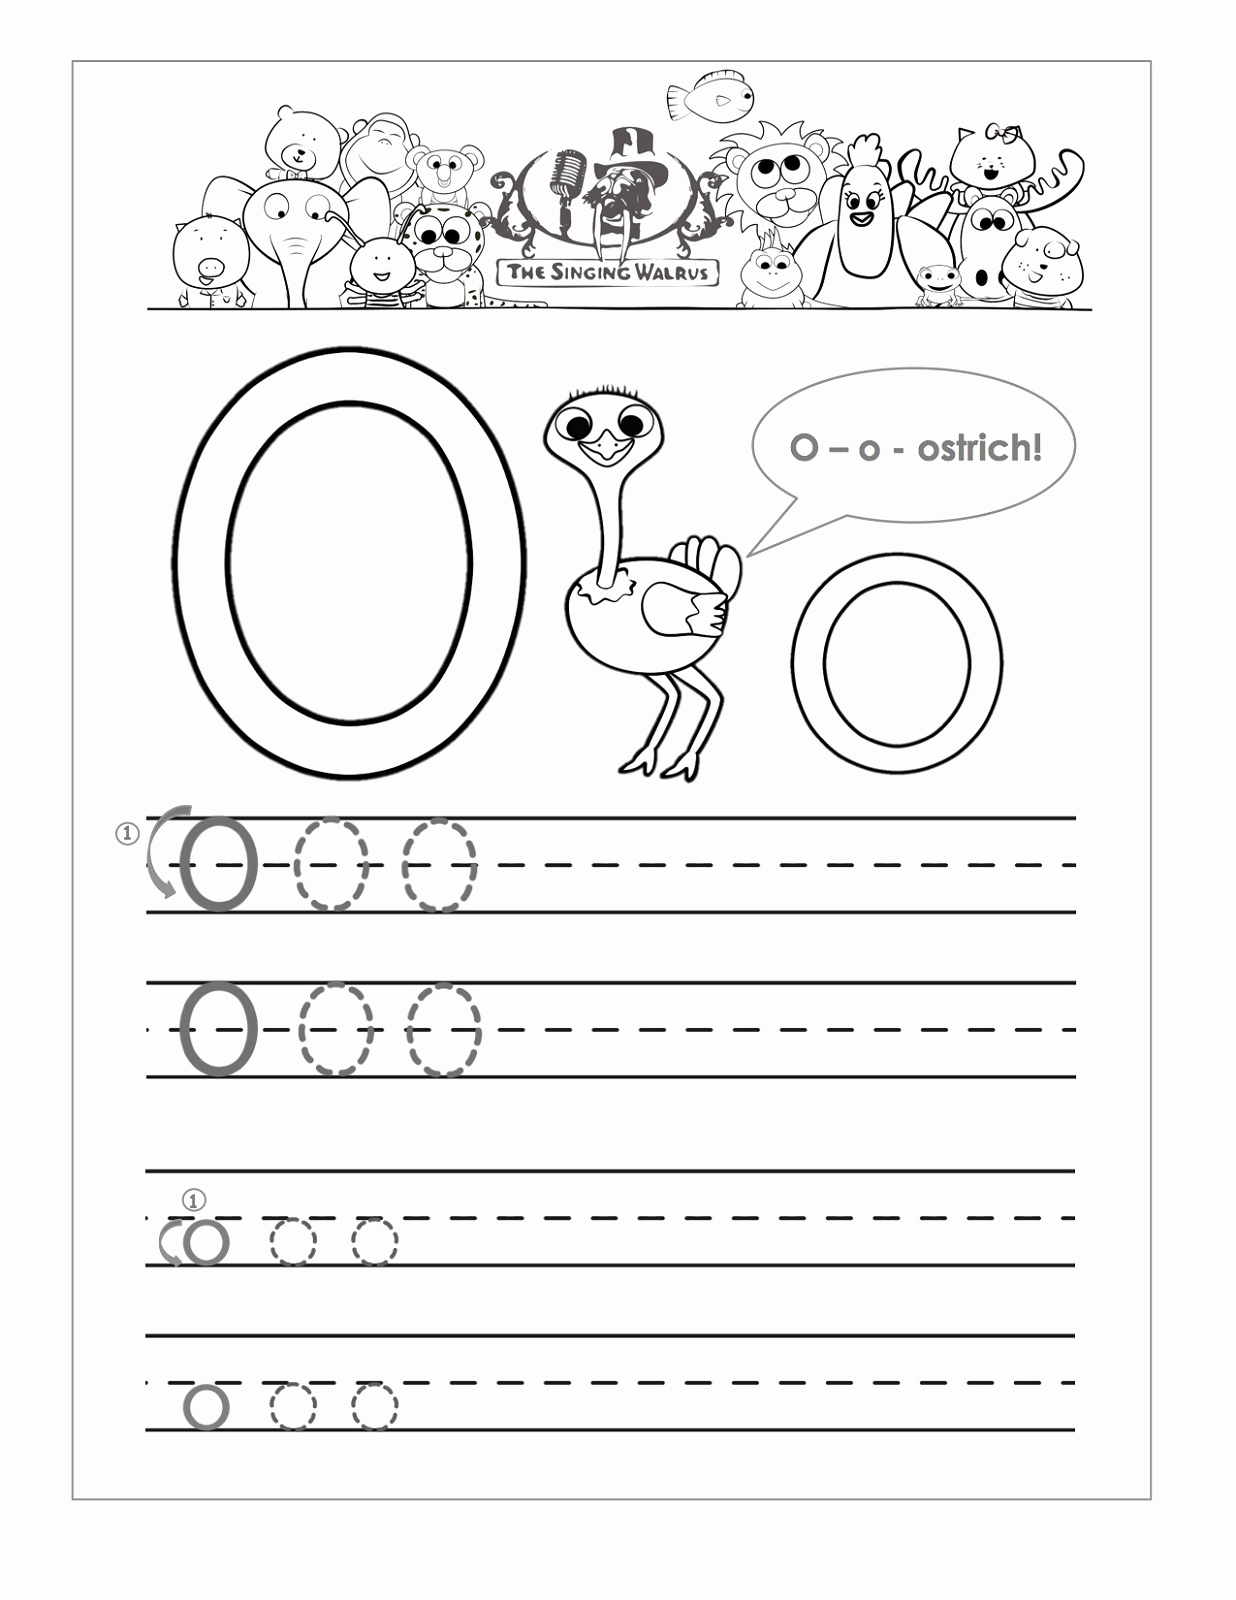 Letter O Worksheet for Kindergarten Inspirational Letter O Worksheets for Preschool